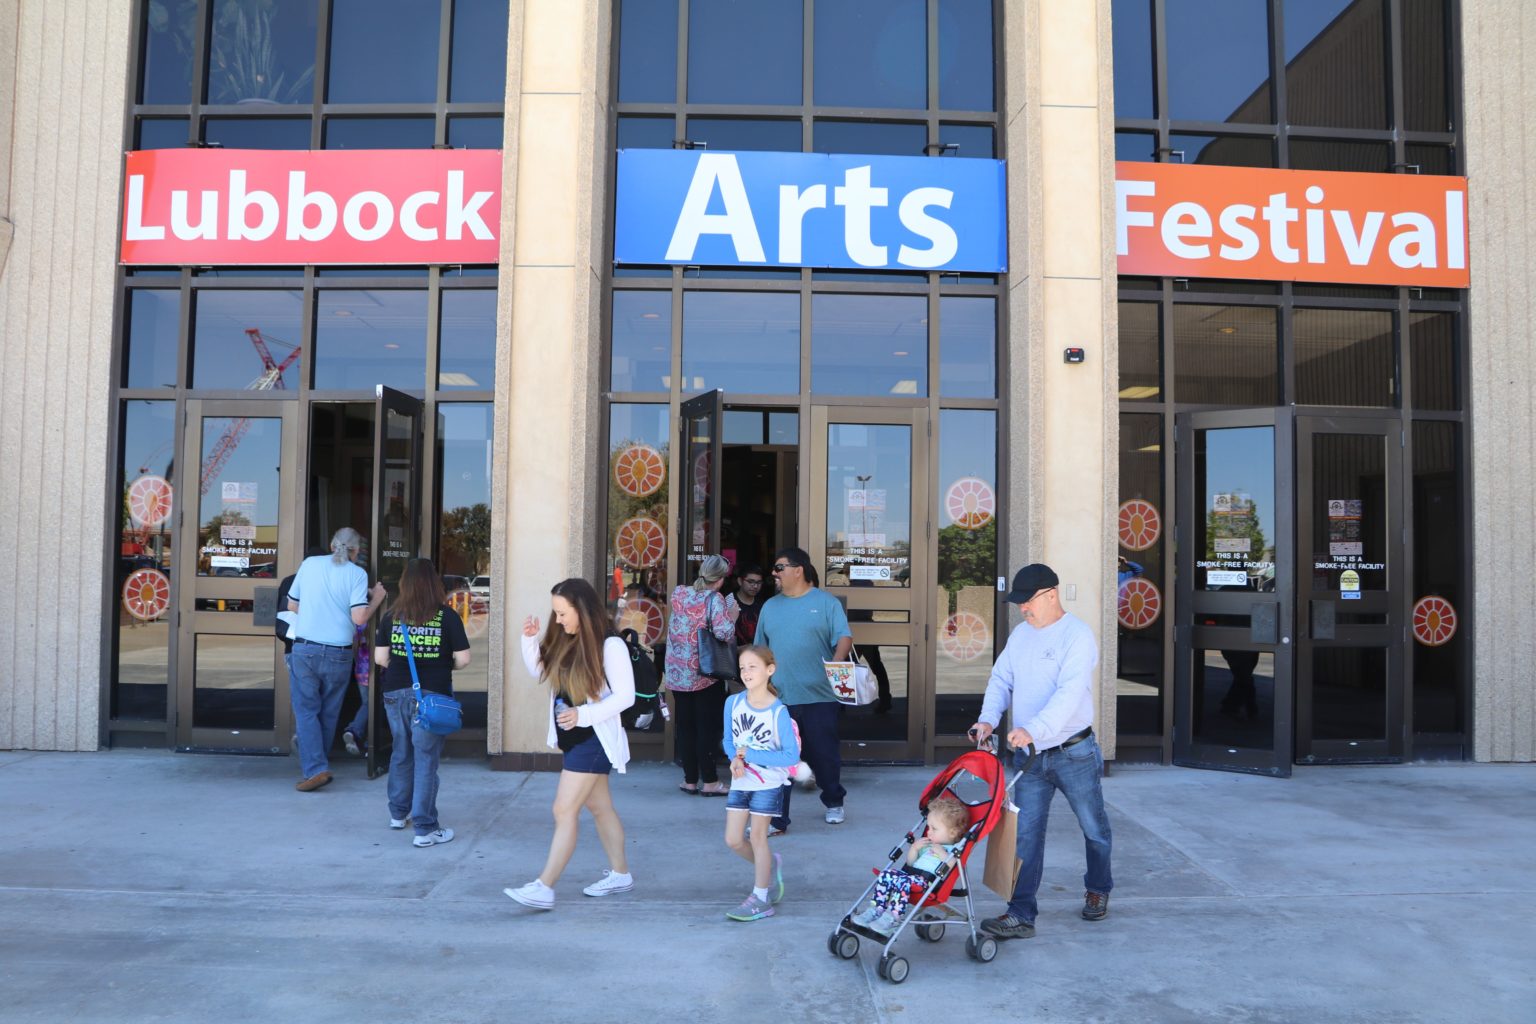 West Texas is Fest Texas! Lubbock's festival snapshot. Lubbock